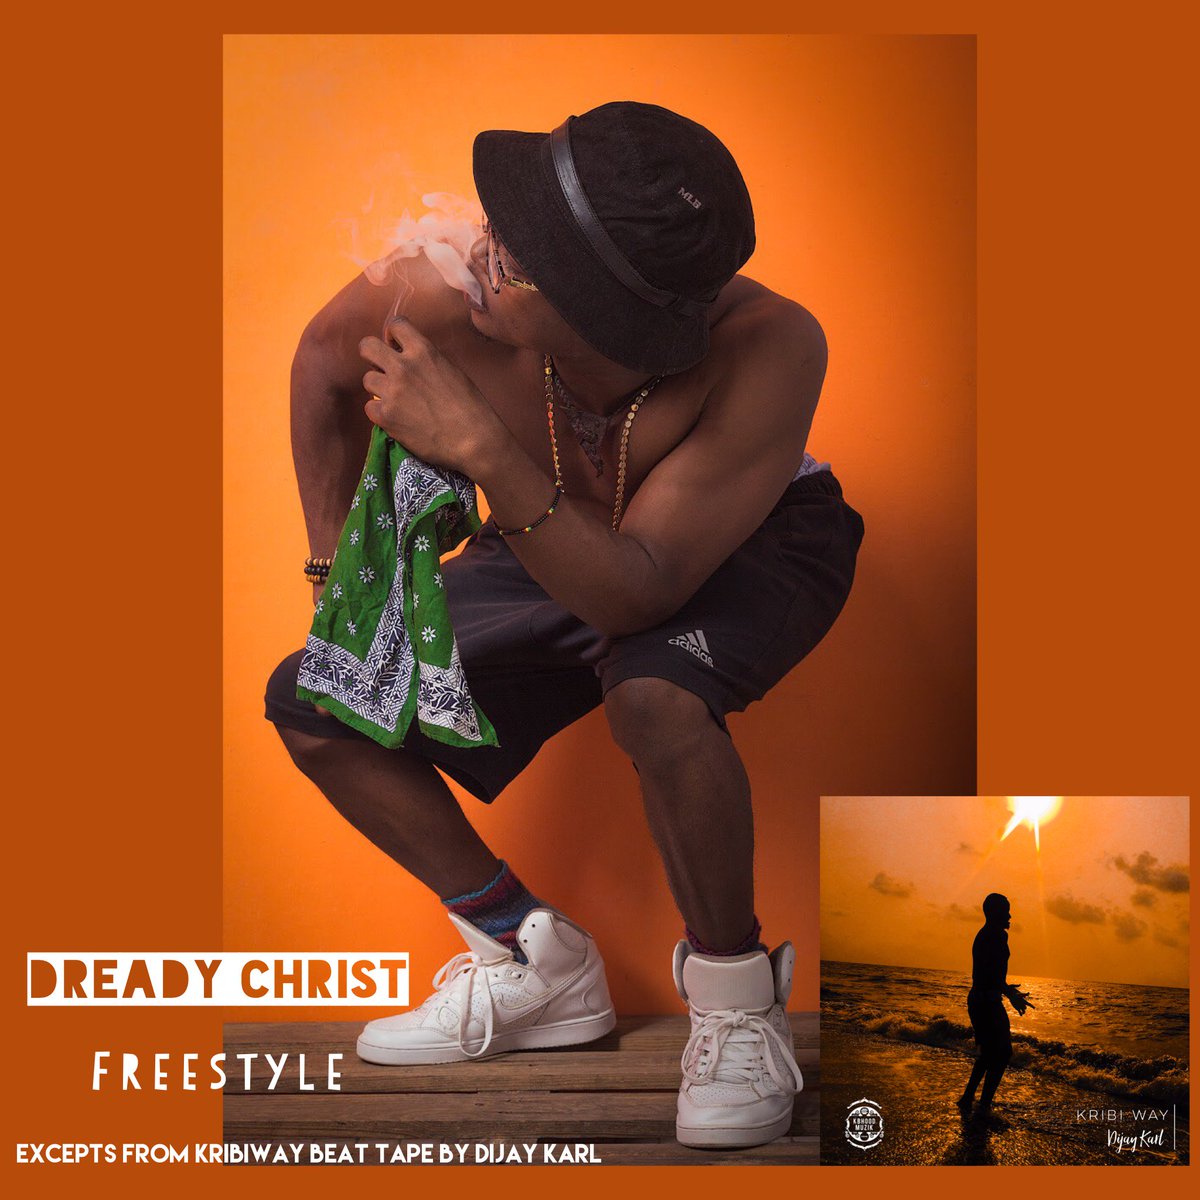 Dijay-Karl Kribi Way (Freestyle) EP by Dready Christ | Album